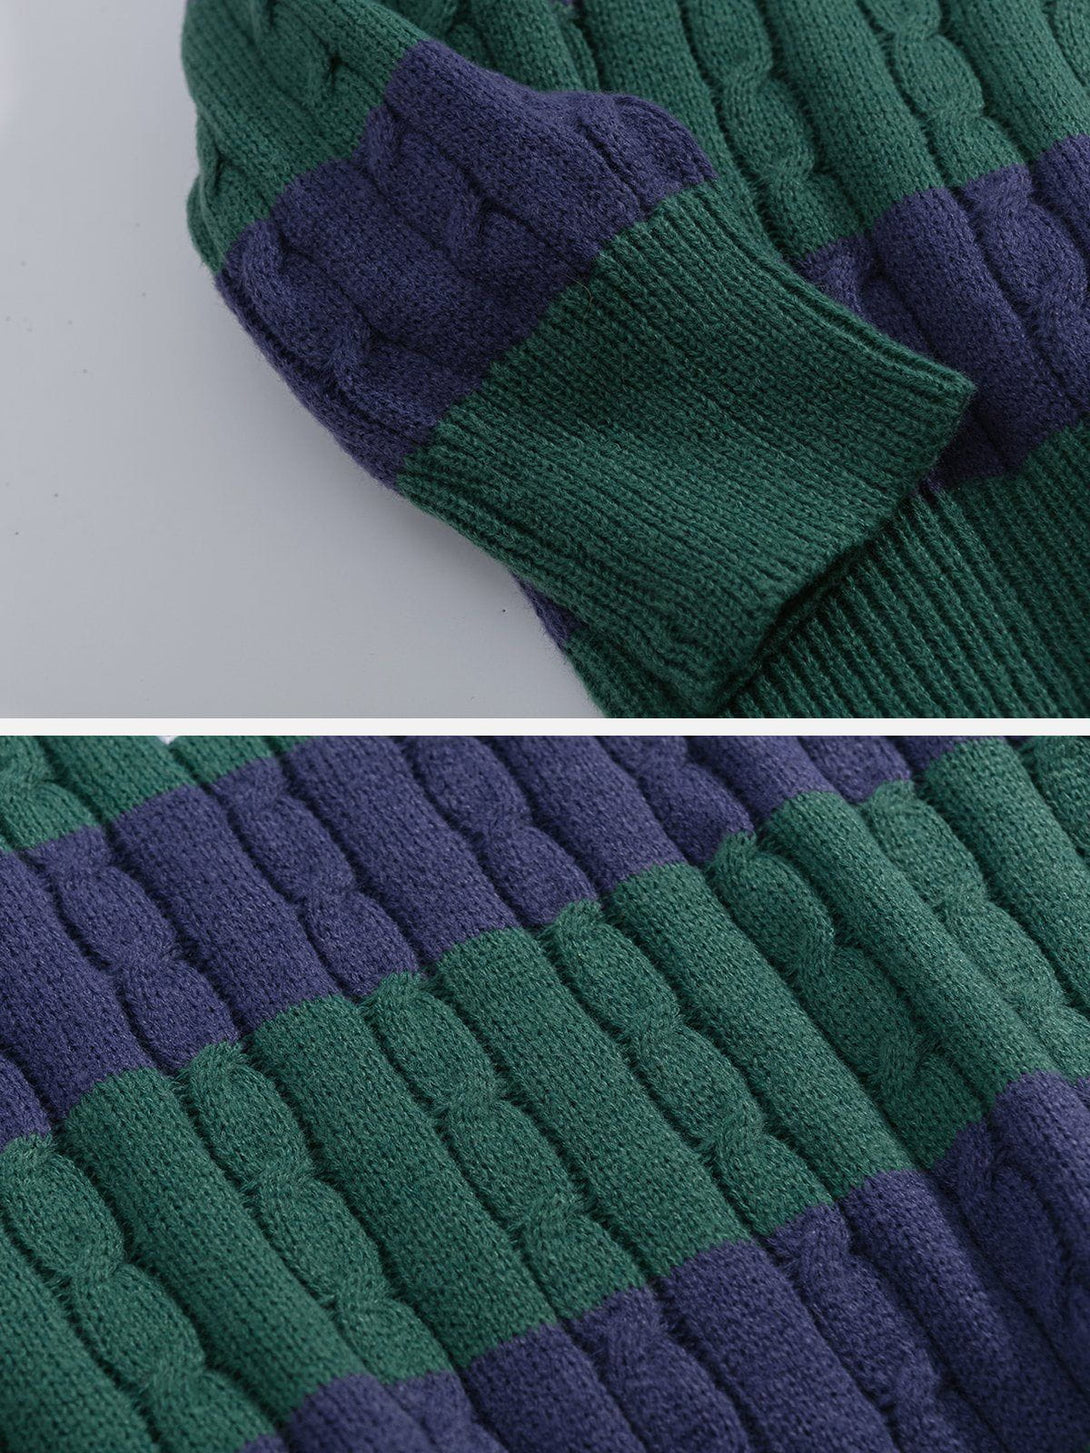 Majesda® - Stripe Polo Sweater outfit ideas streetwear fashion